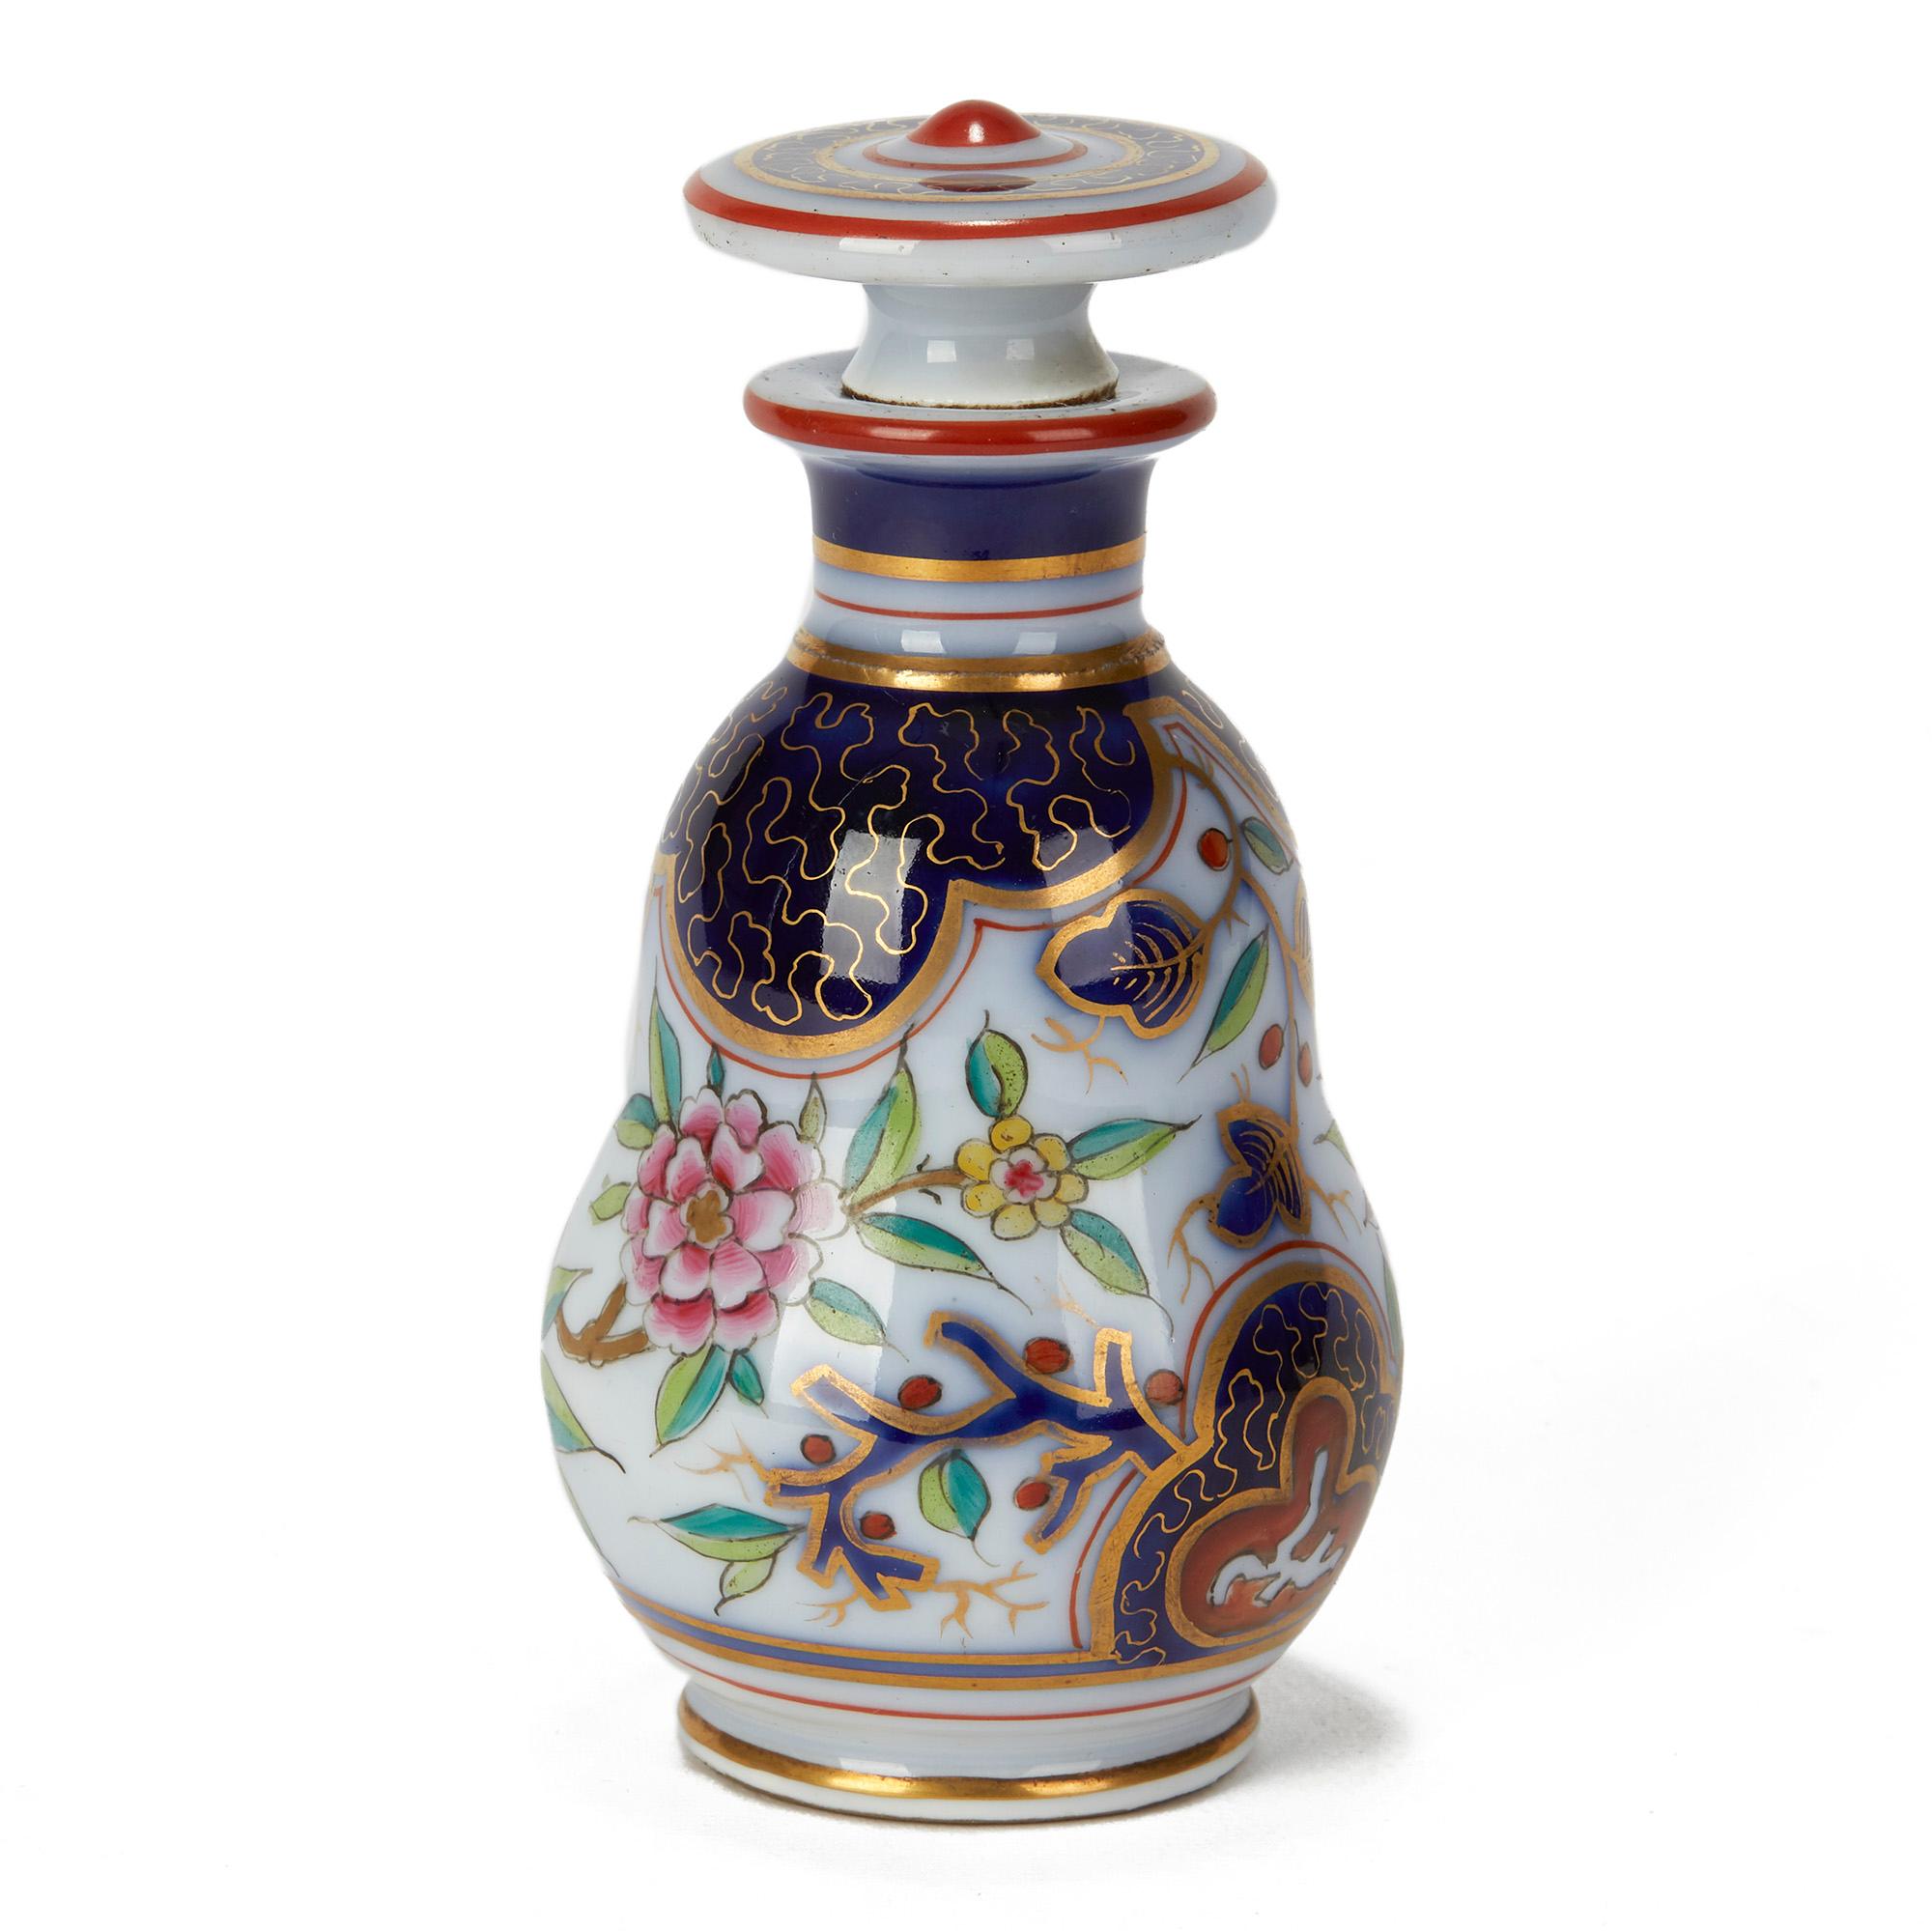 Ceramic French Antique Porcelain Imari Design Scent Bottle, 19th Century For Sale